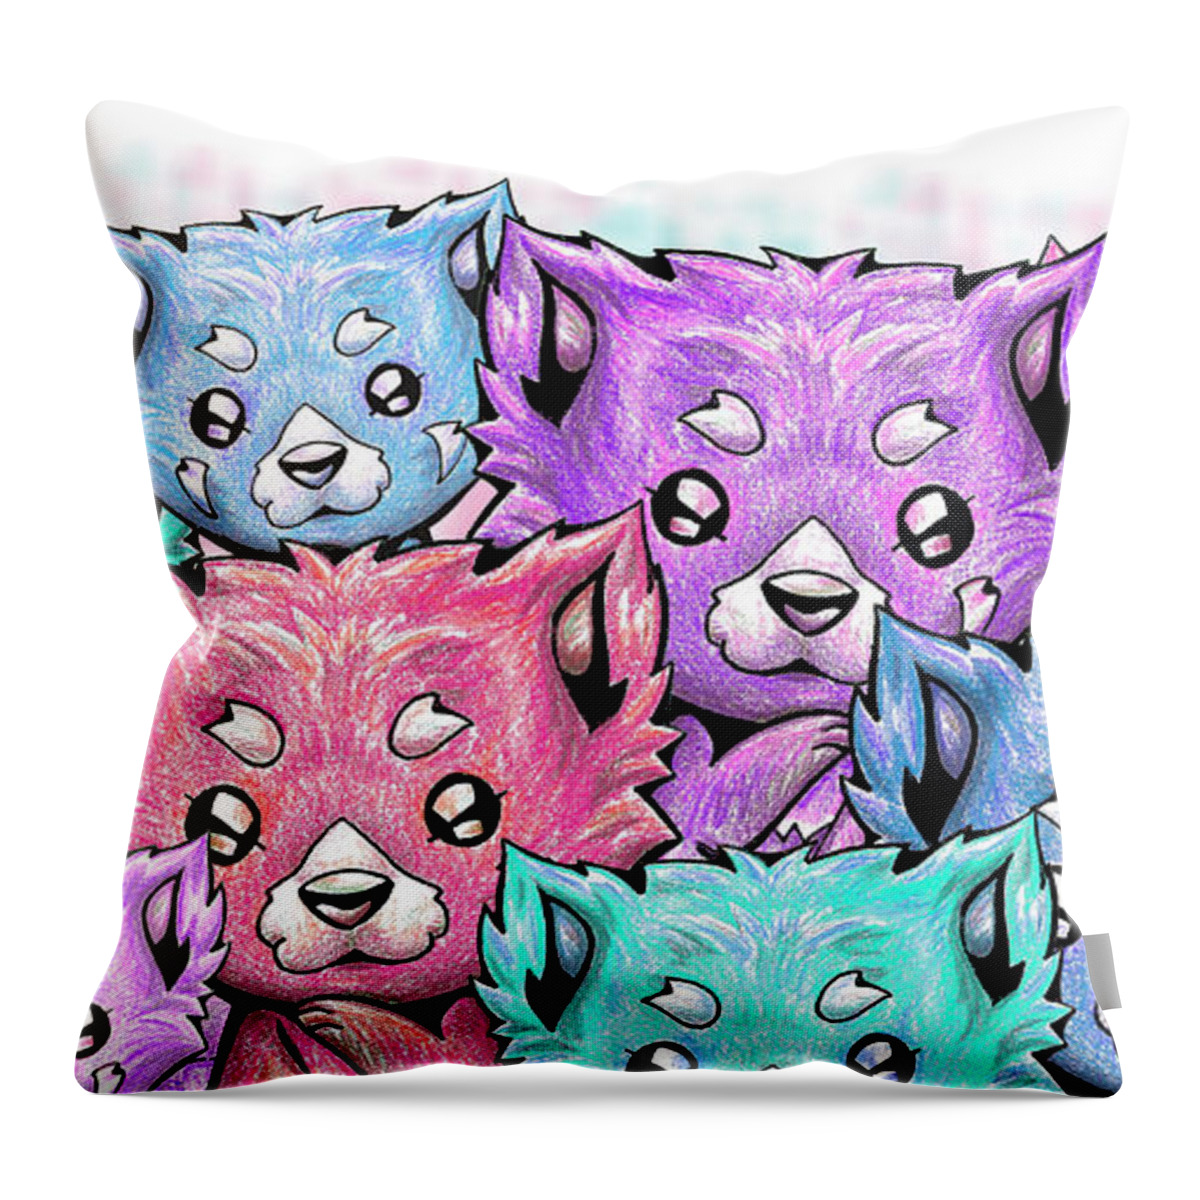 Panda Throw Pillow featuring the mixed media Curious Pandas by Sipporah Art and Illustration